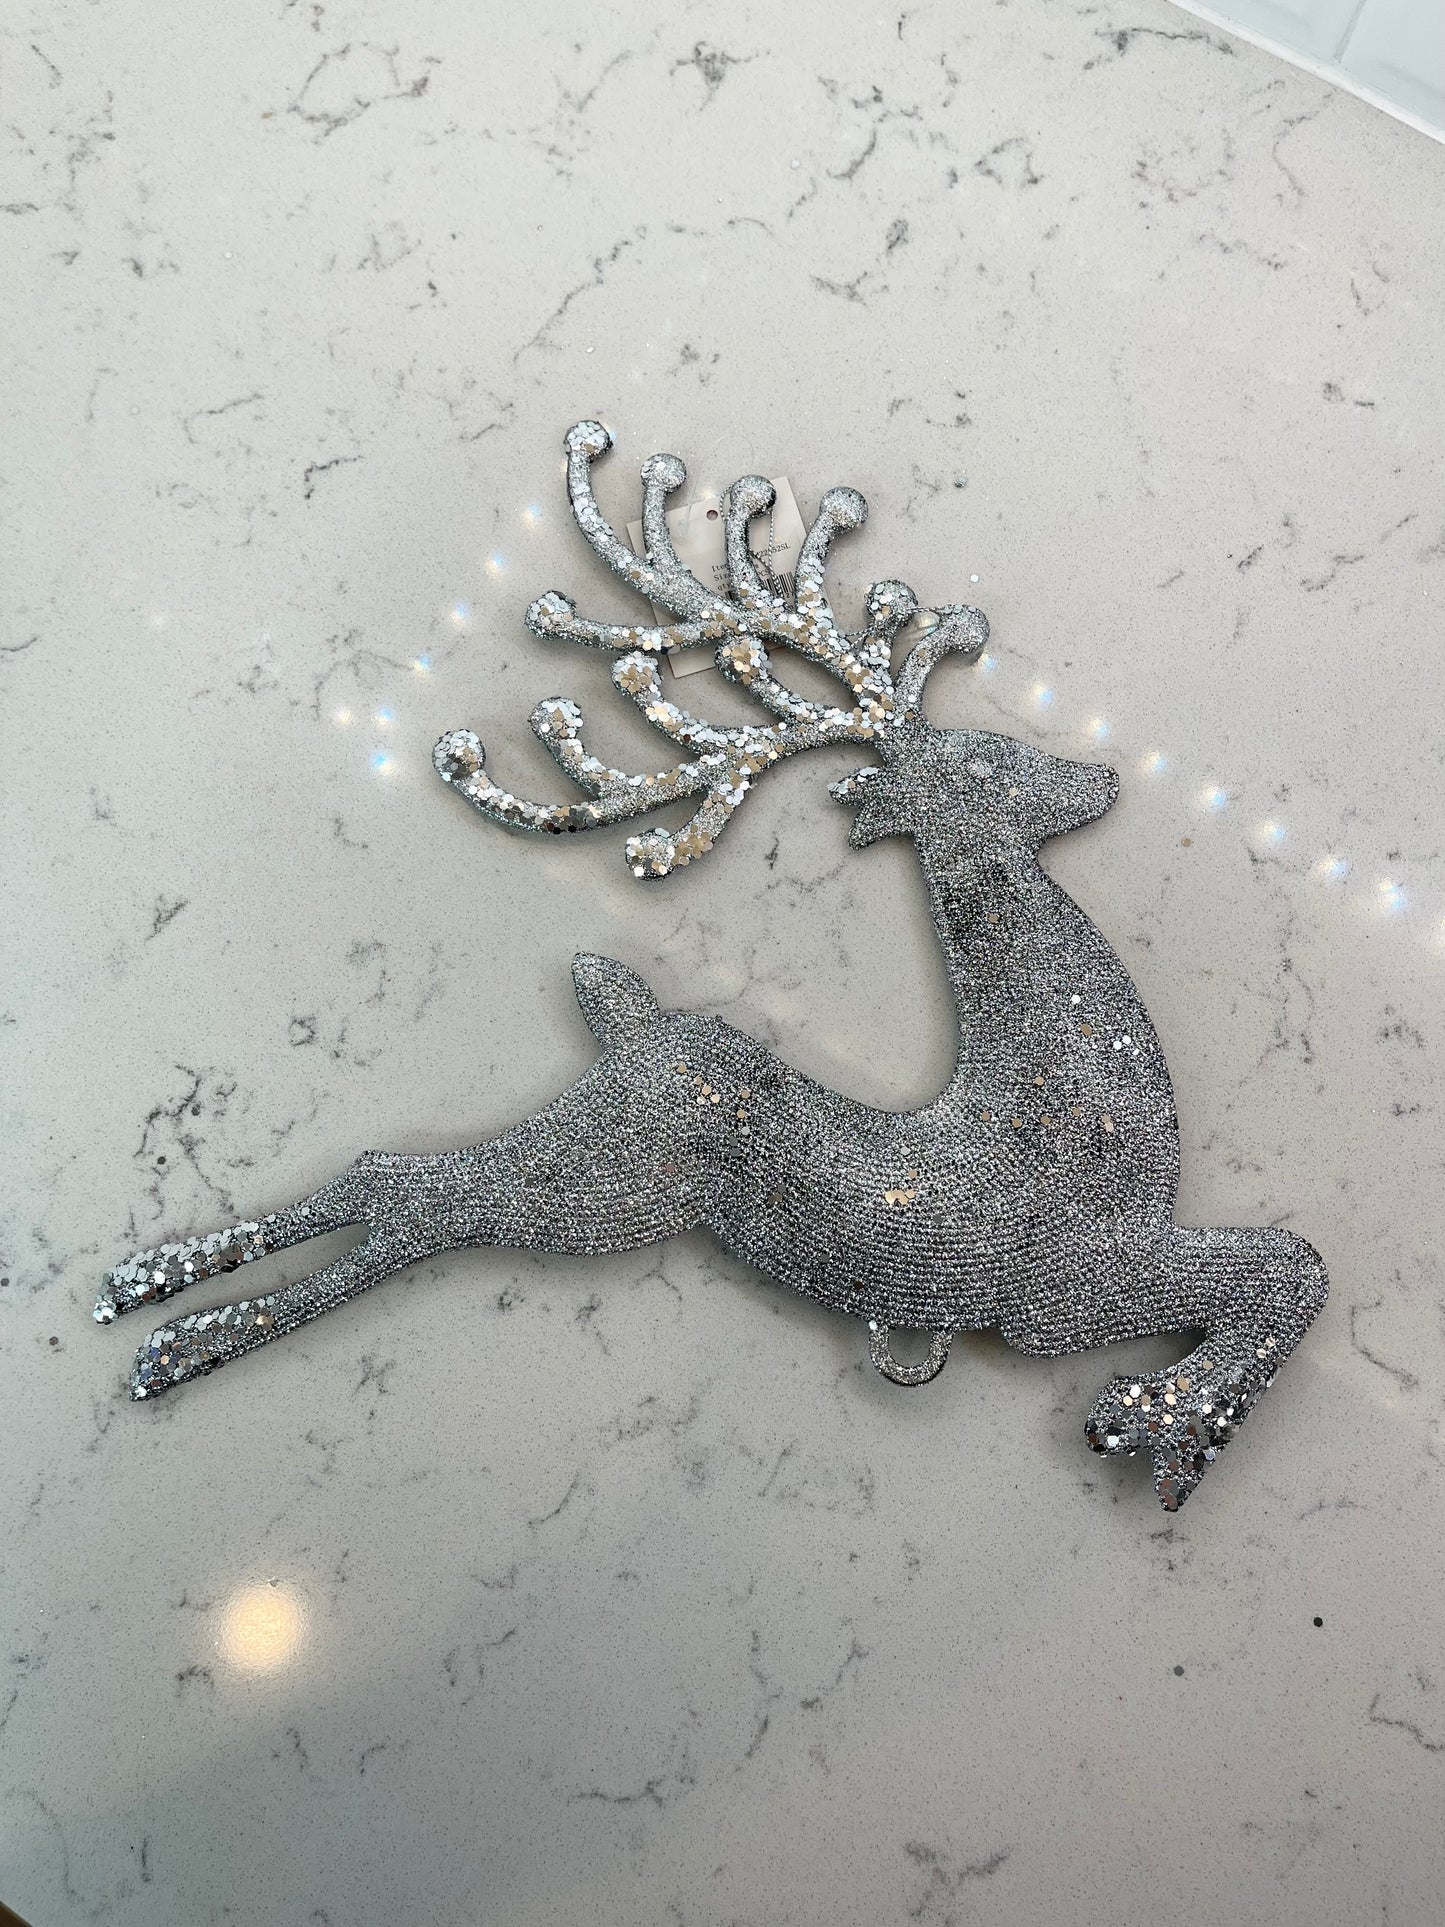 Sparkling Silver Reindeer Ornaments, 12 inch, Set of 5